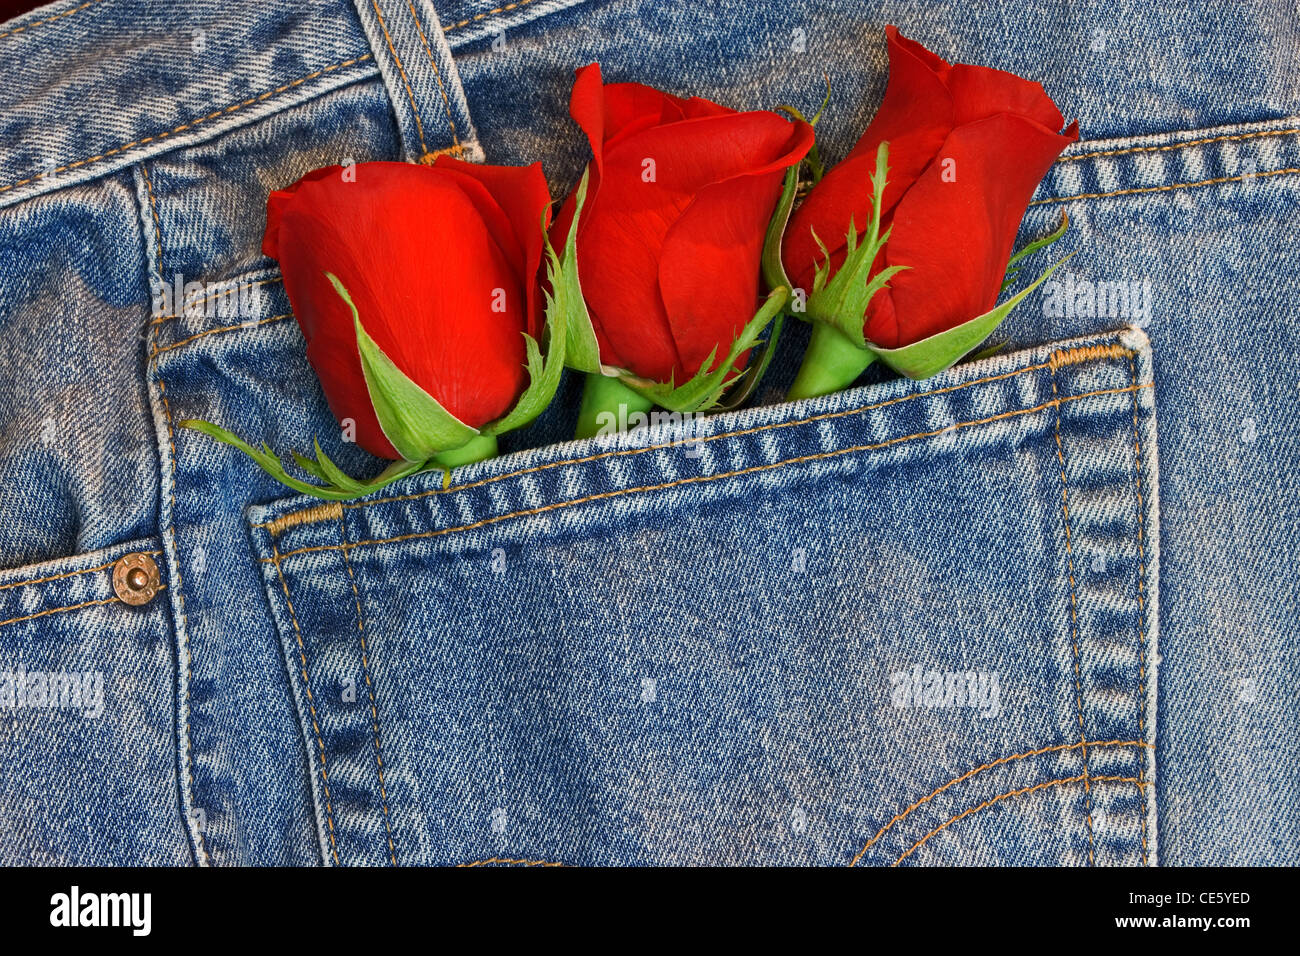 Rote Rosen in Blue Jeans-Tasche Stockfotografie - Alamy